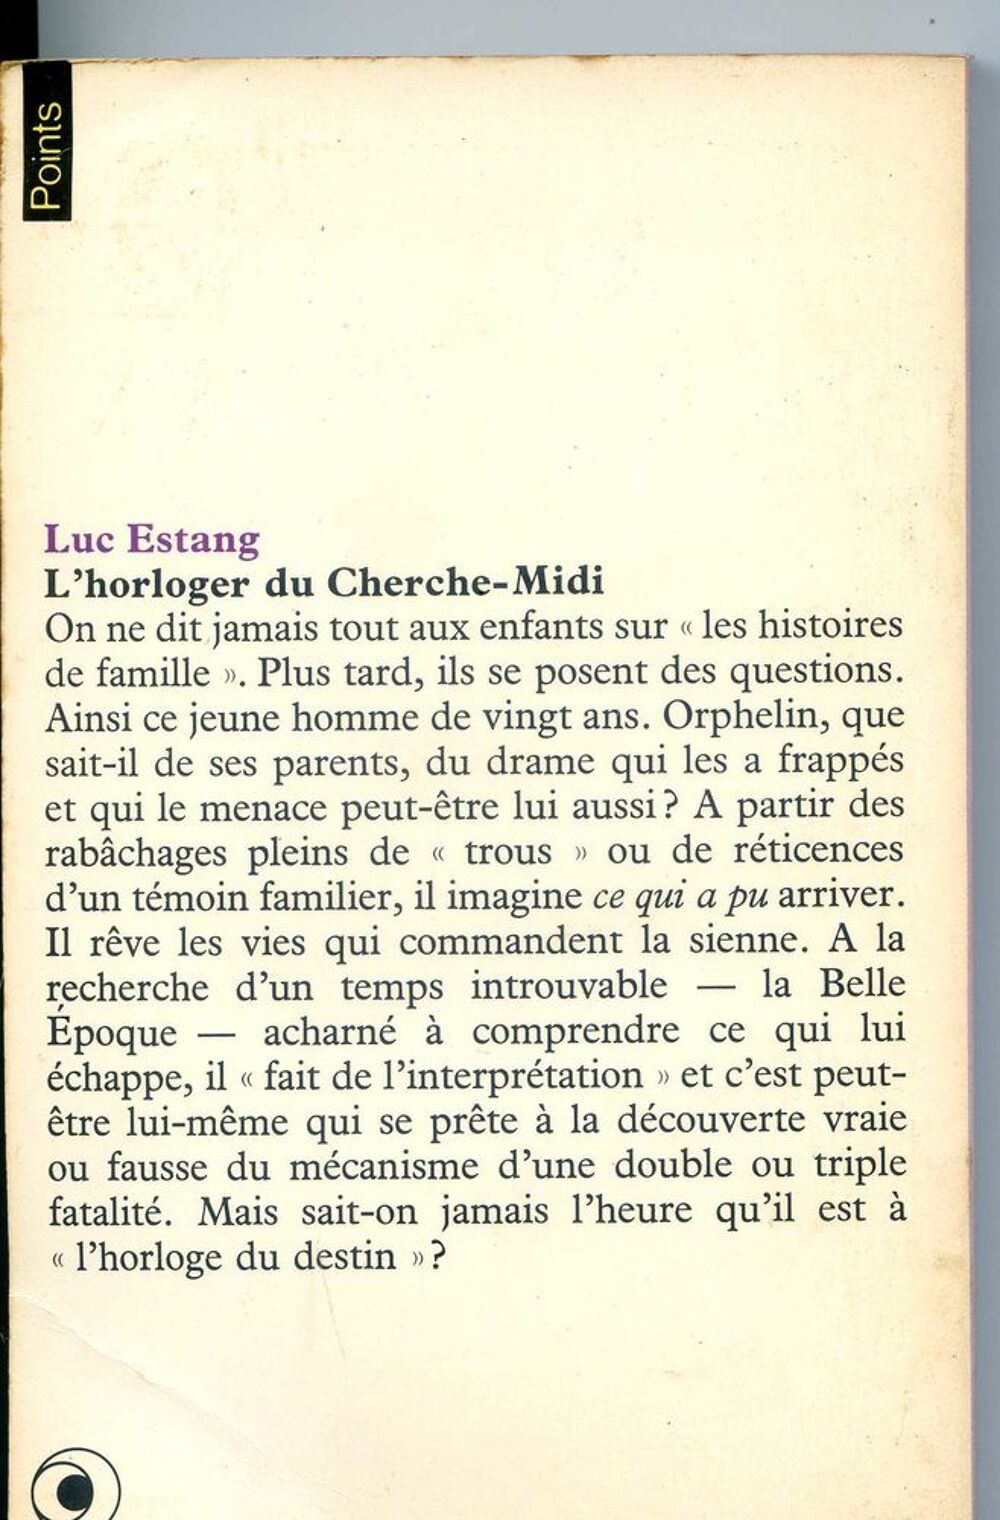 L'horloger du Cherche-Midi - Luc Estang, Livres et BD